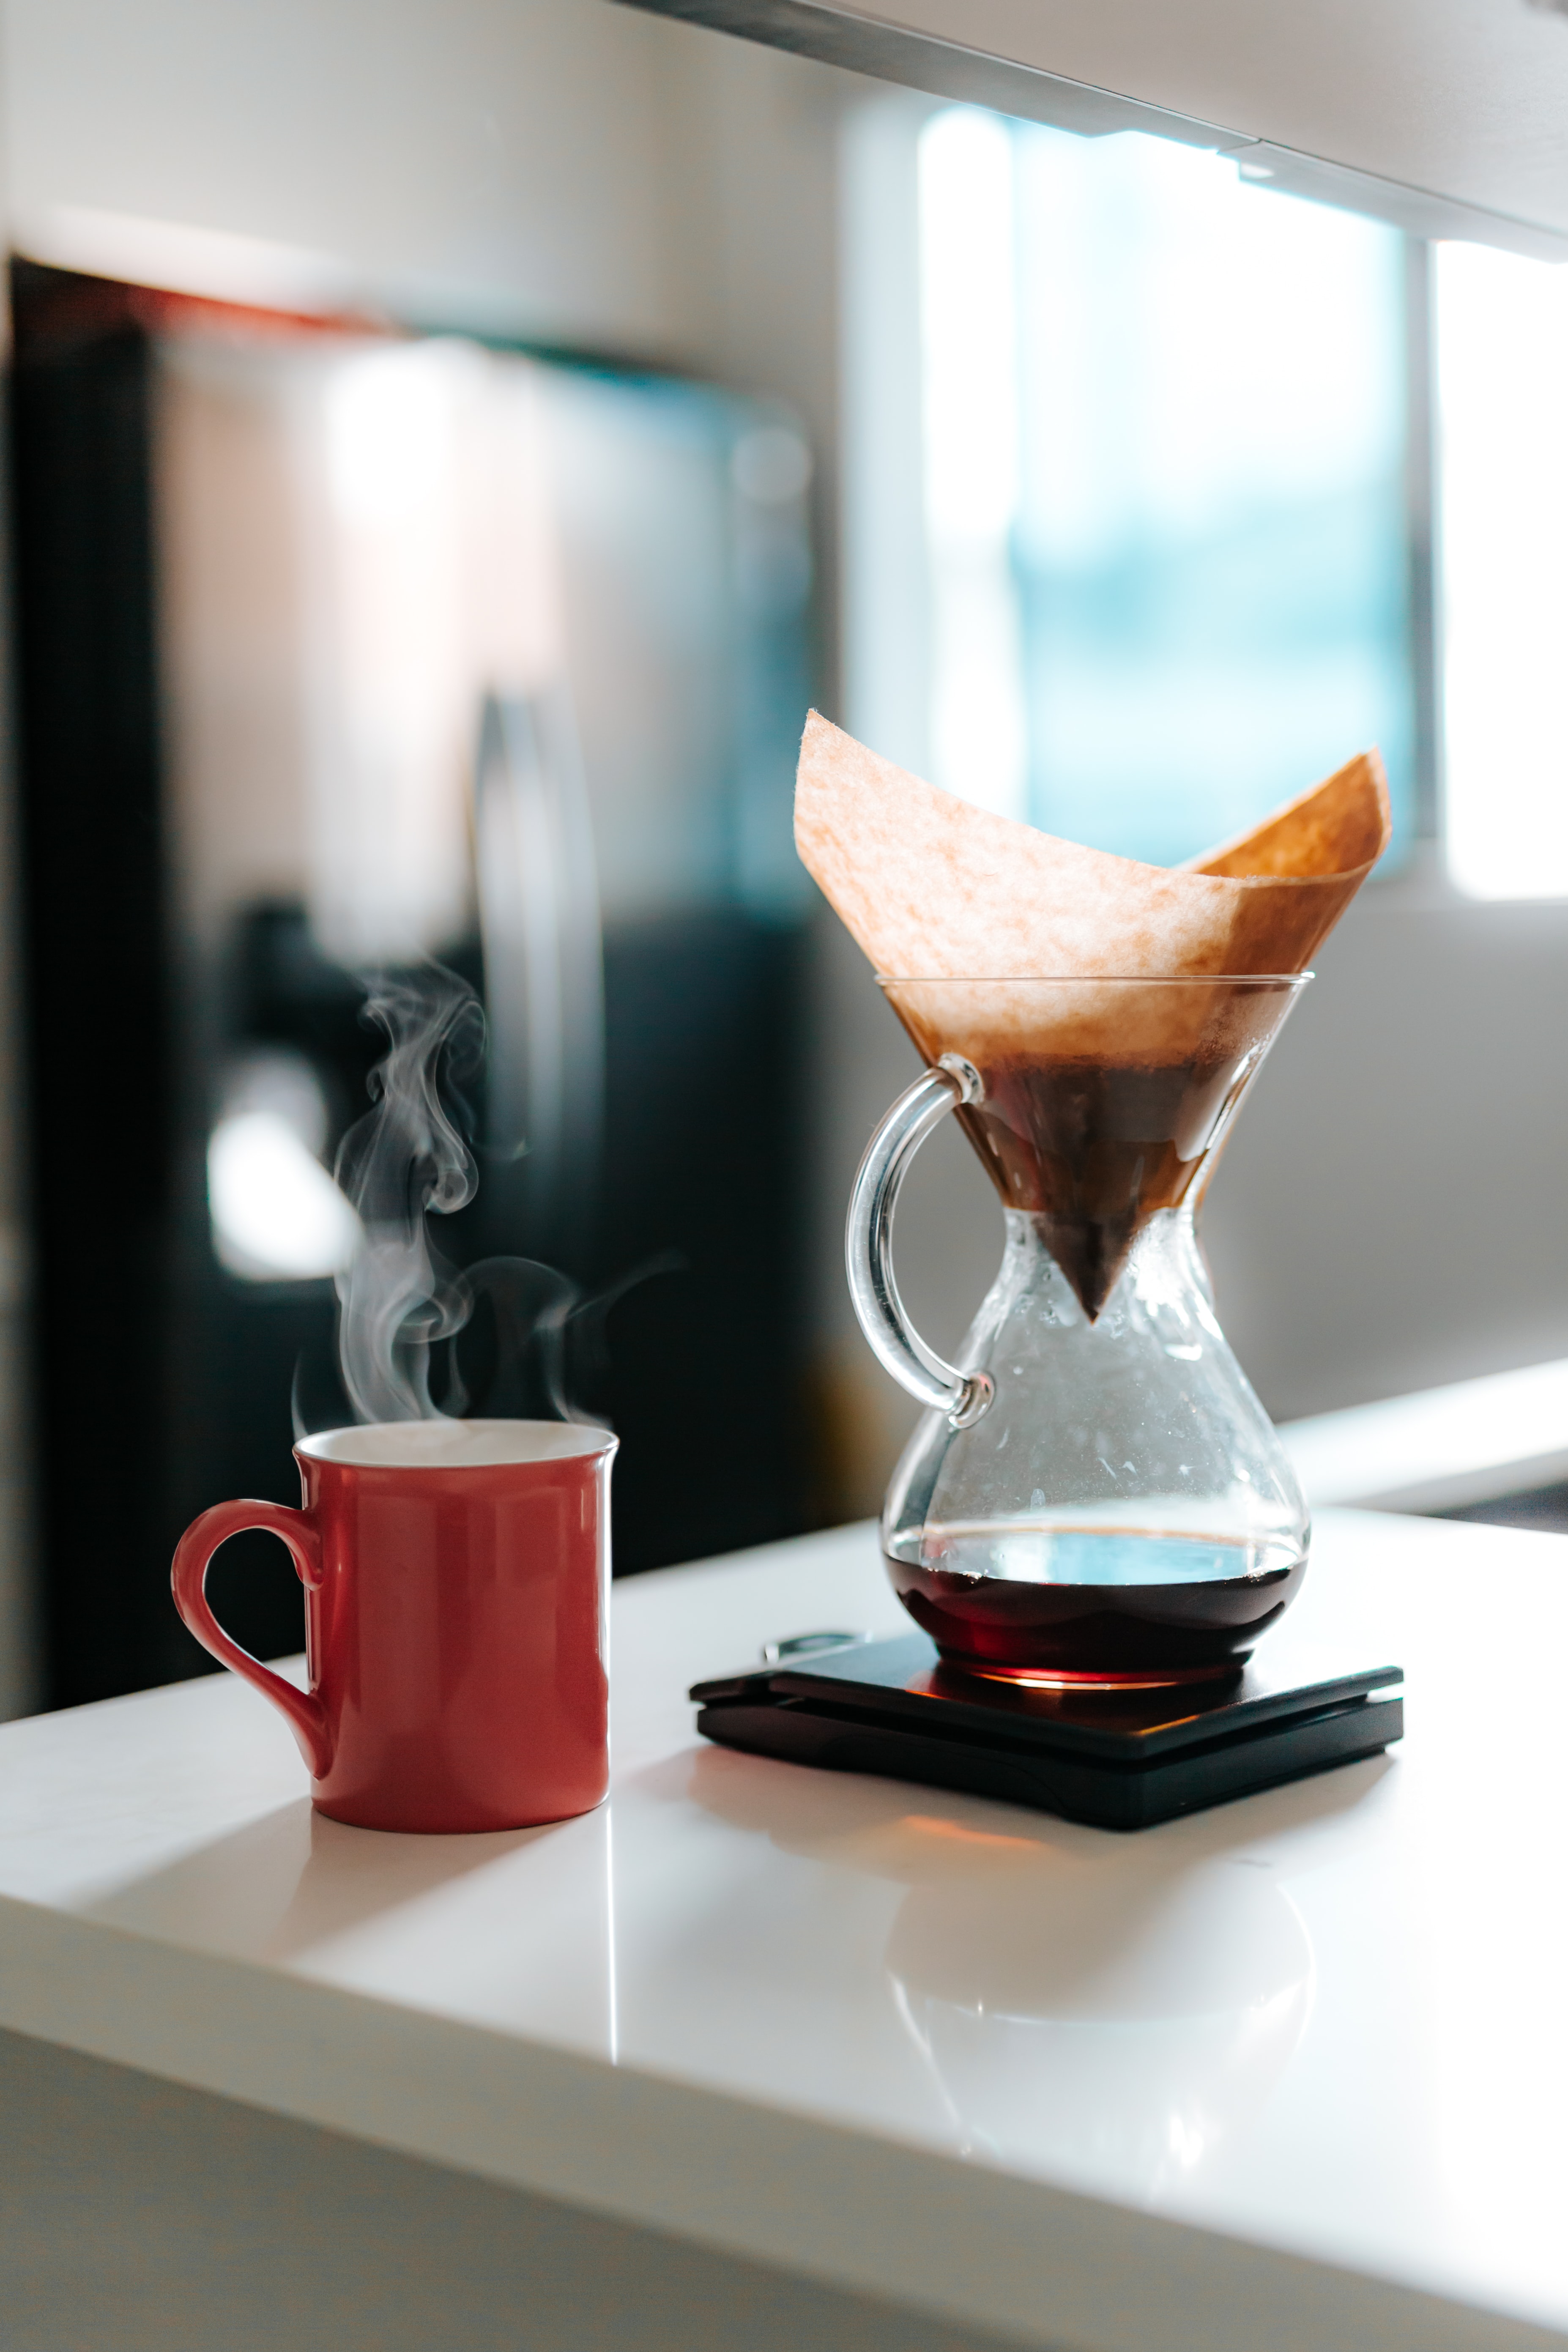 android morning, food, coffee, cup, mug, chemex, kemex